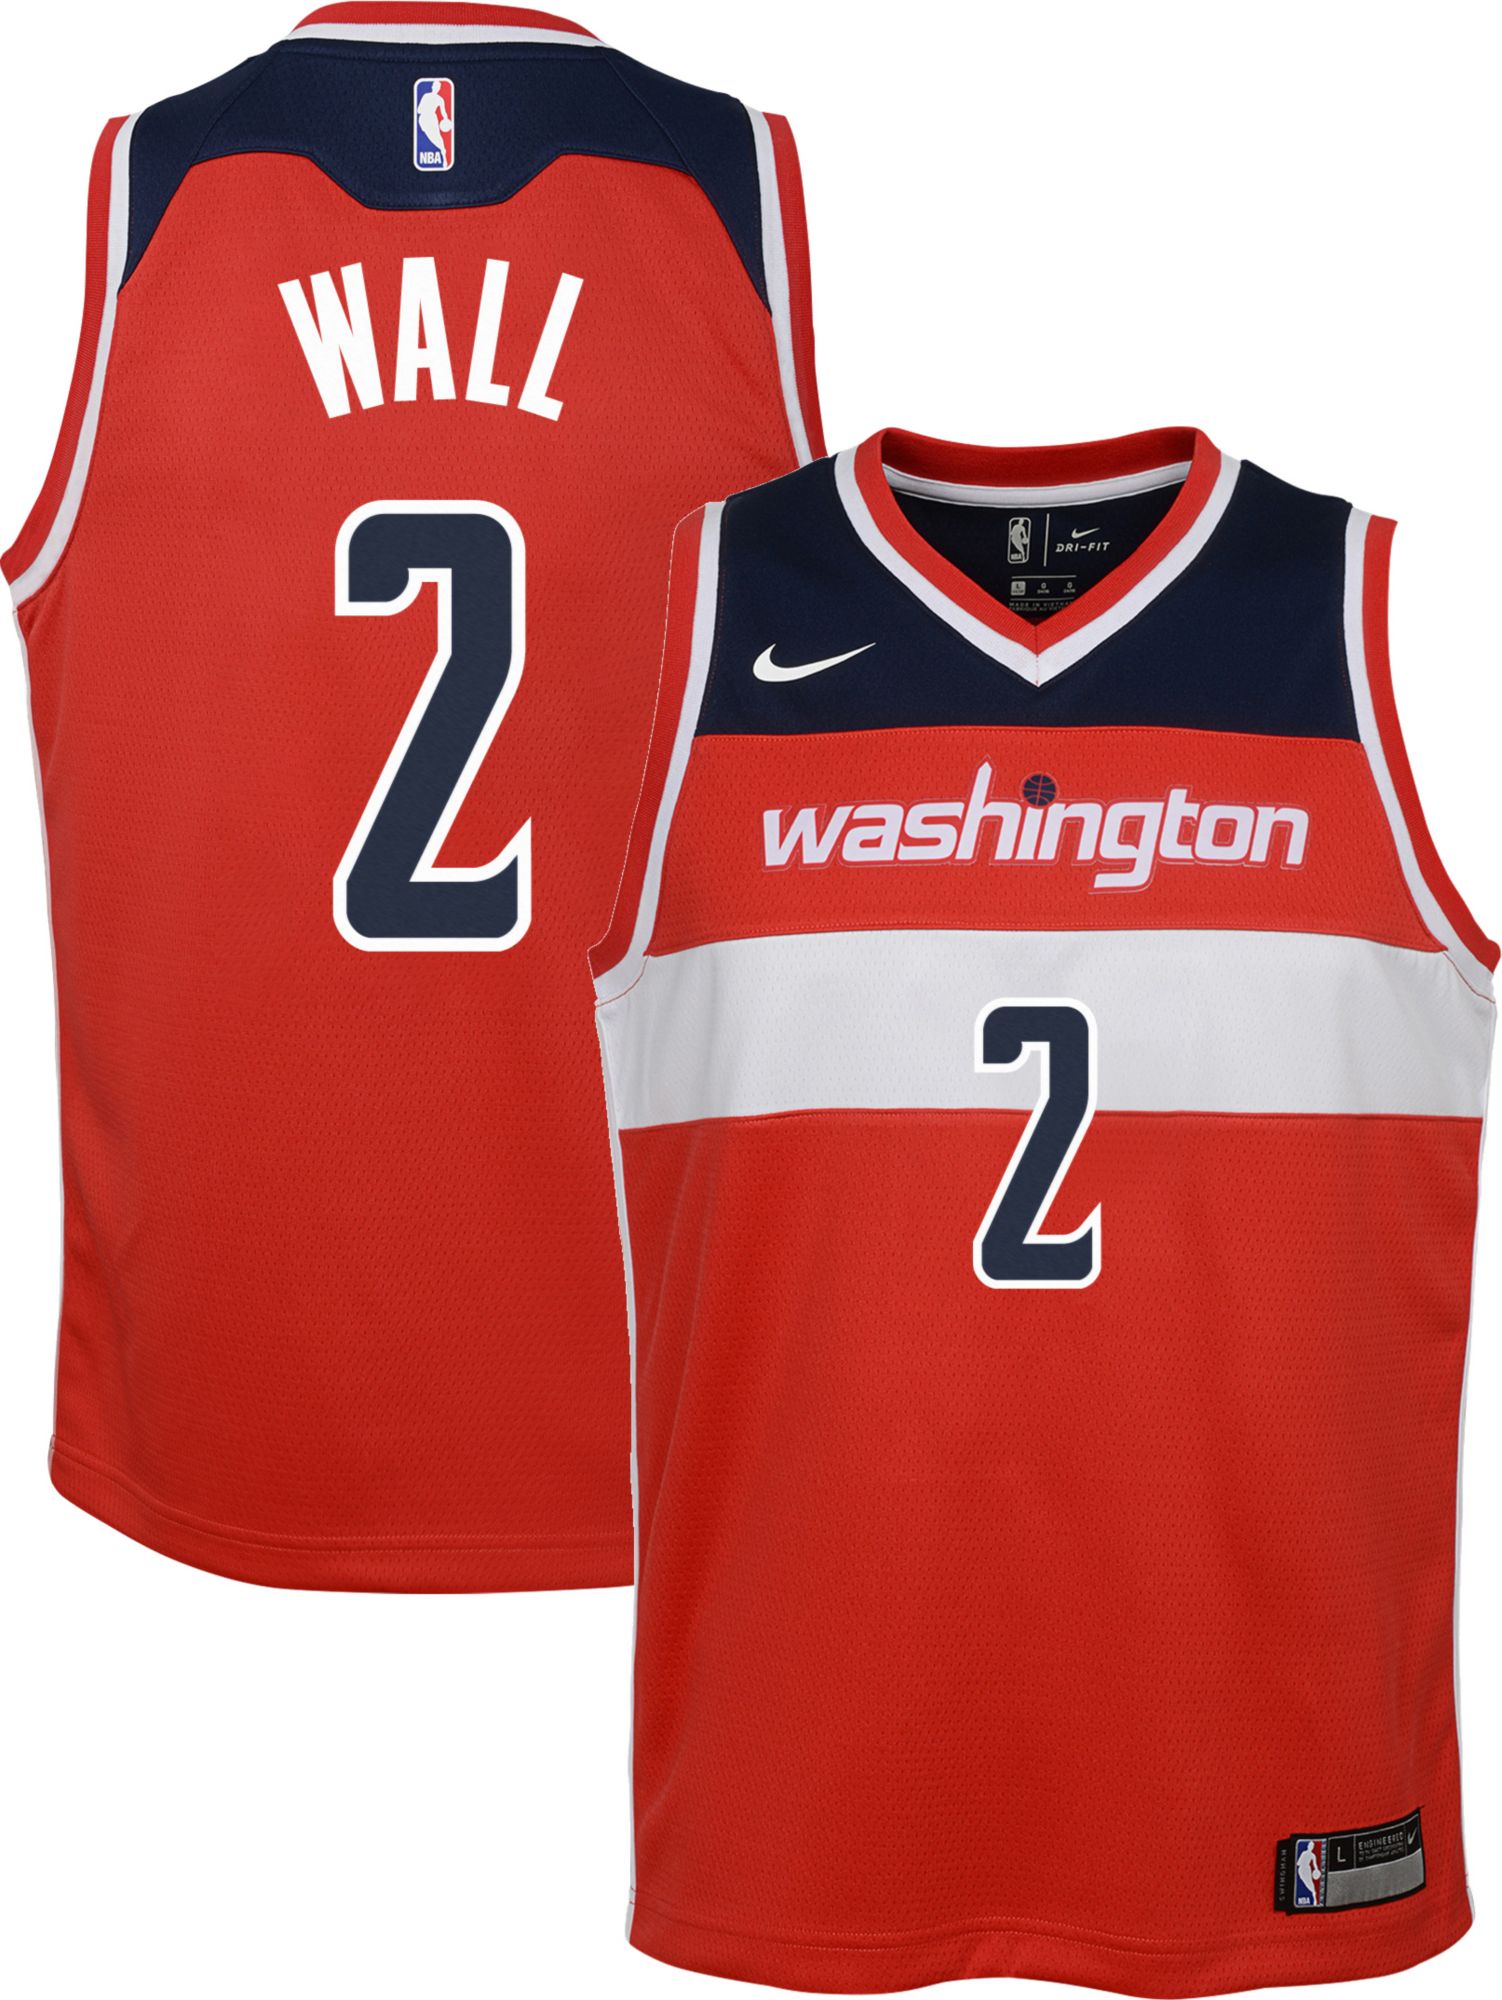 Nike Youth Washington Wizards John Wall 